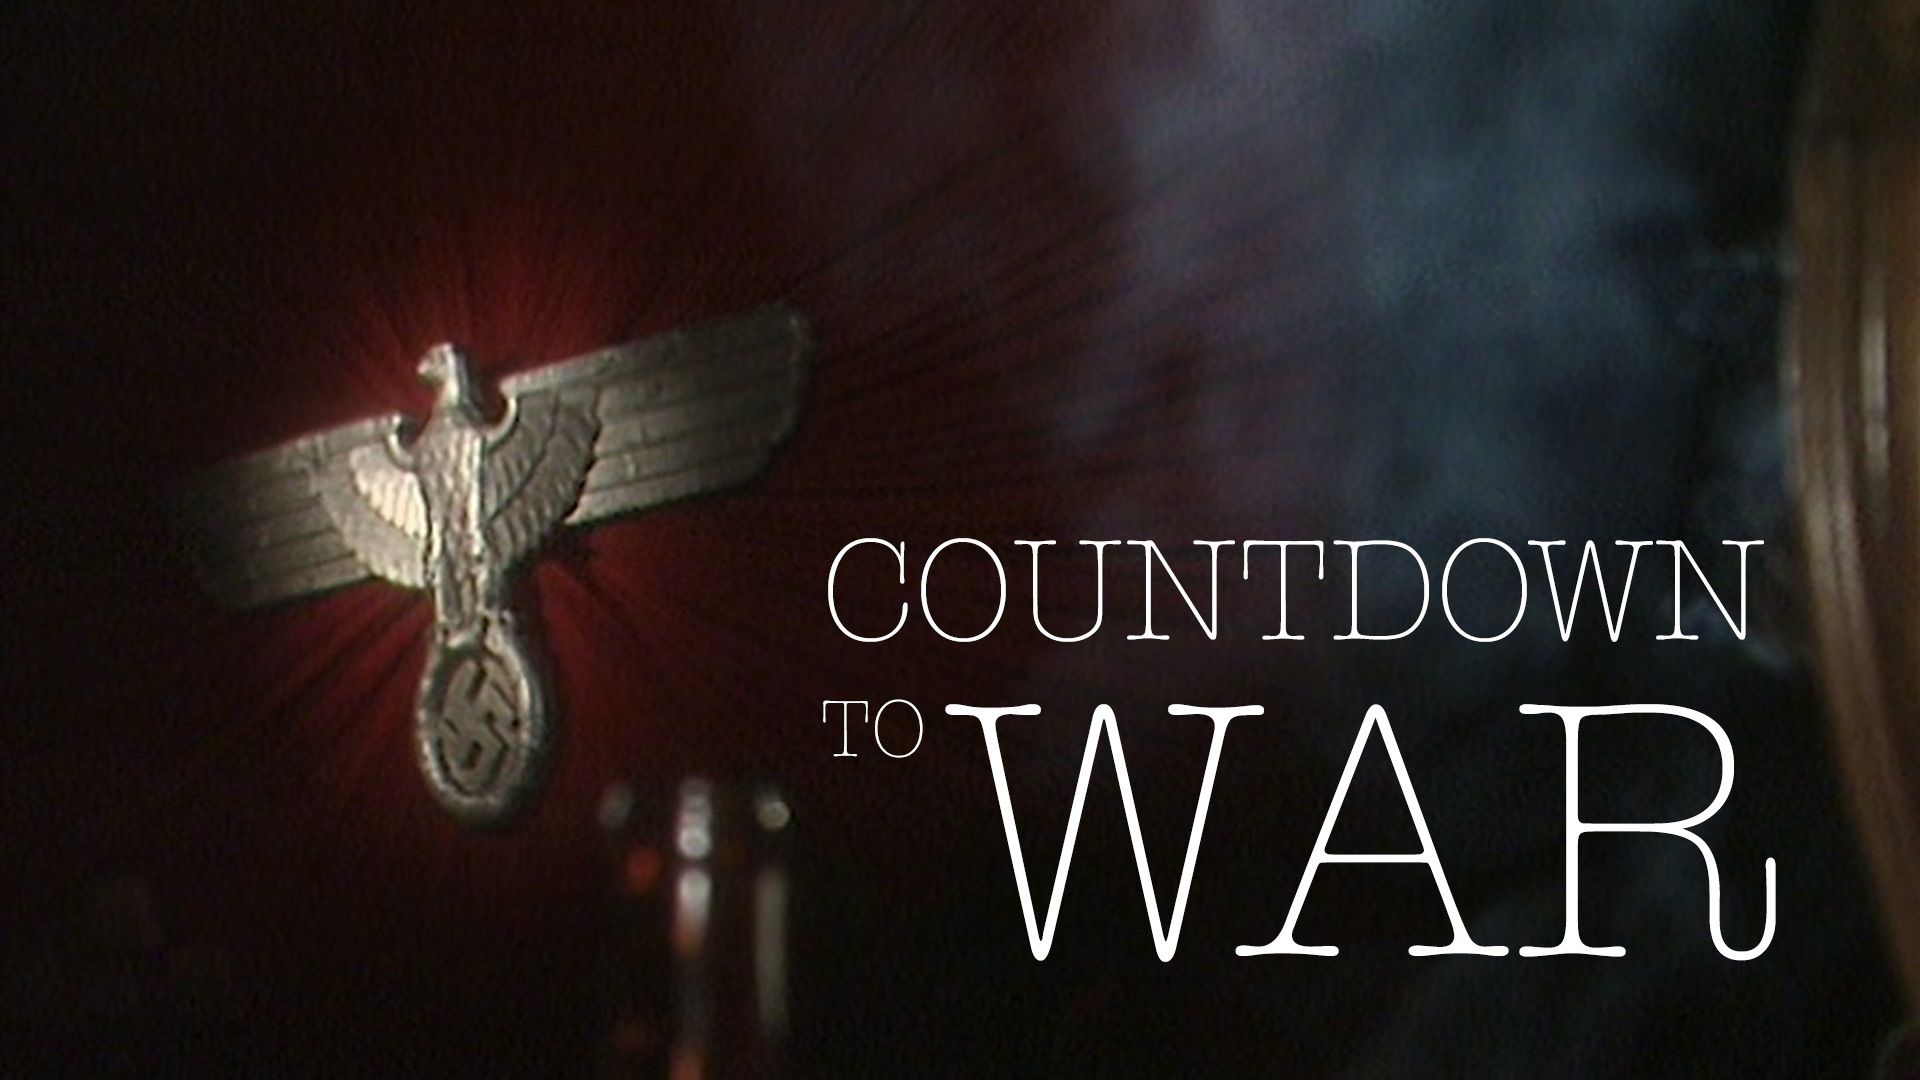 Countdown to War Backdrop